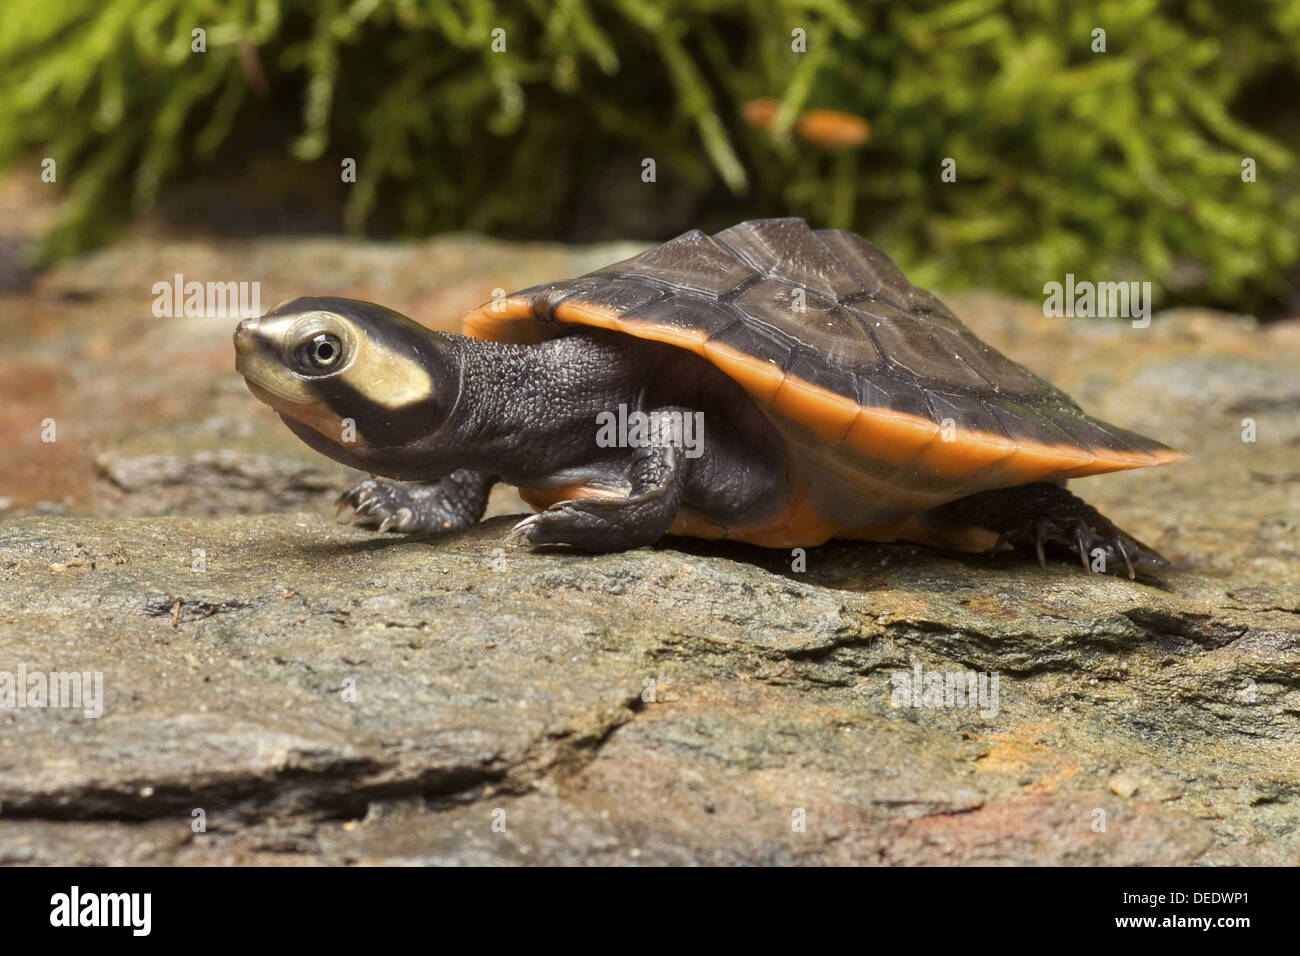 Red-bellied short-necked turtle, Emydura subglobosa Stock Photo